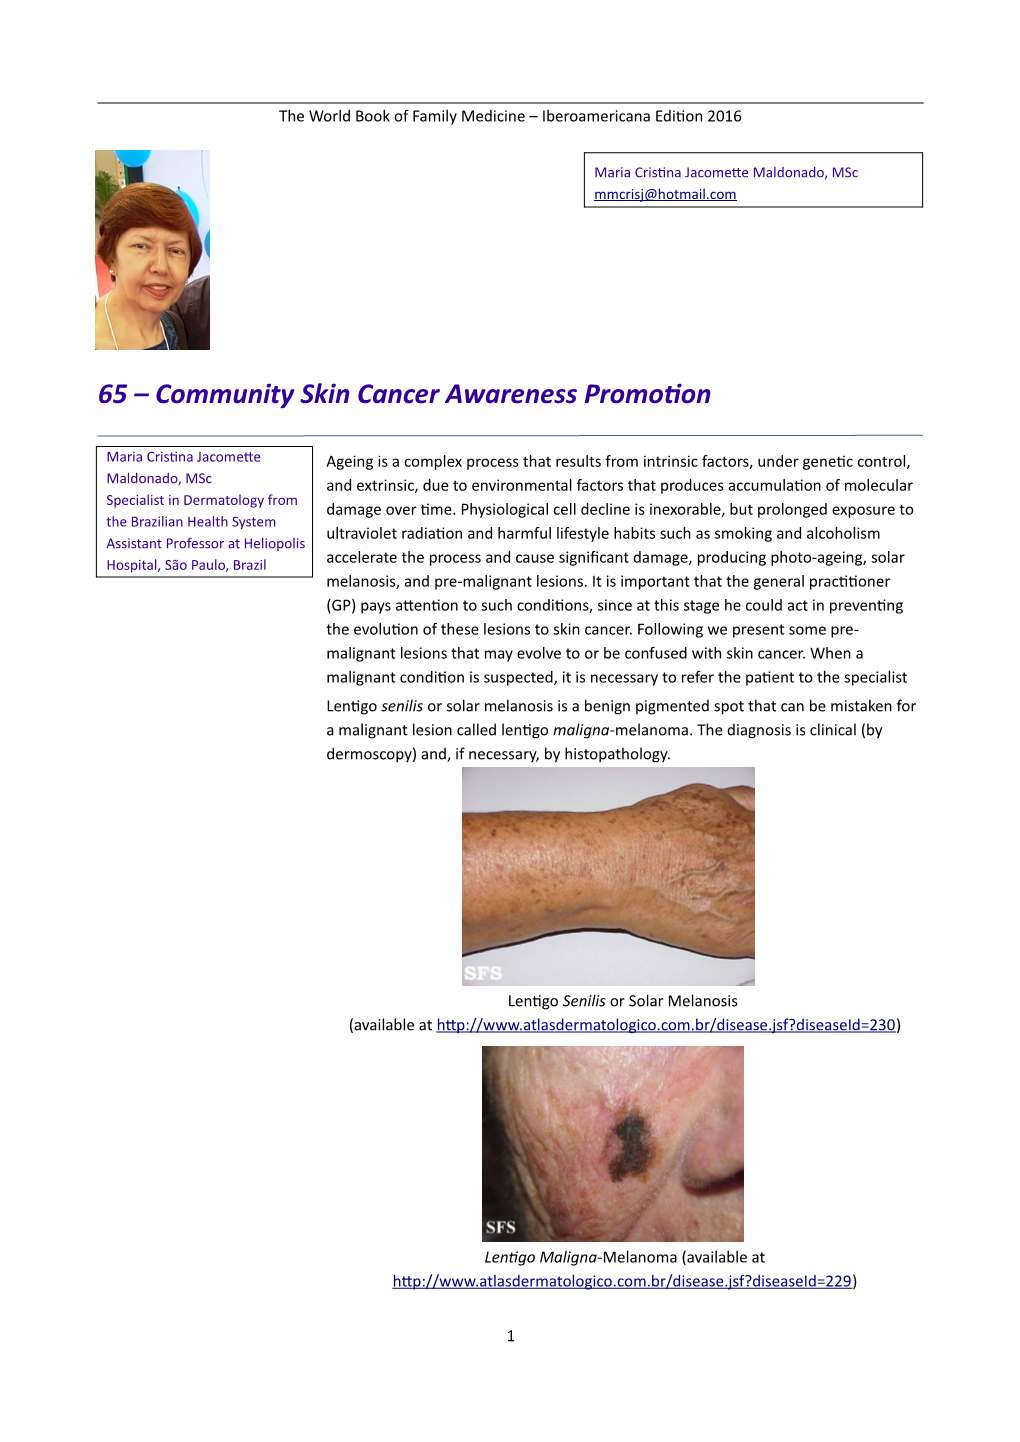 Community Skin Cancer Awareness Promotion